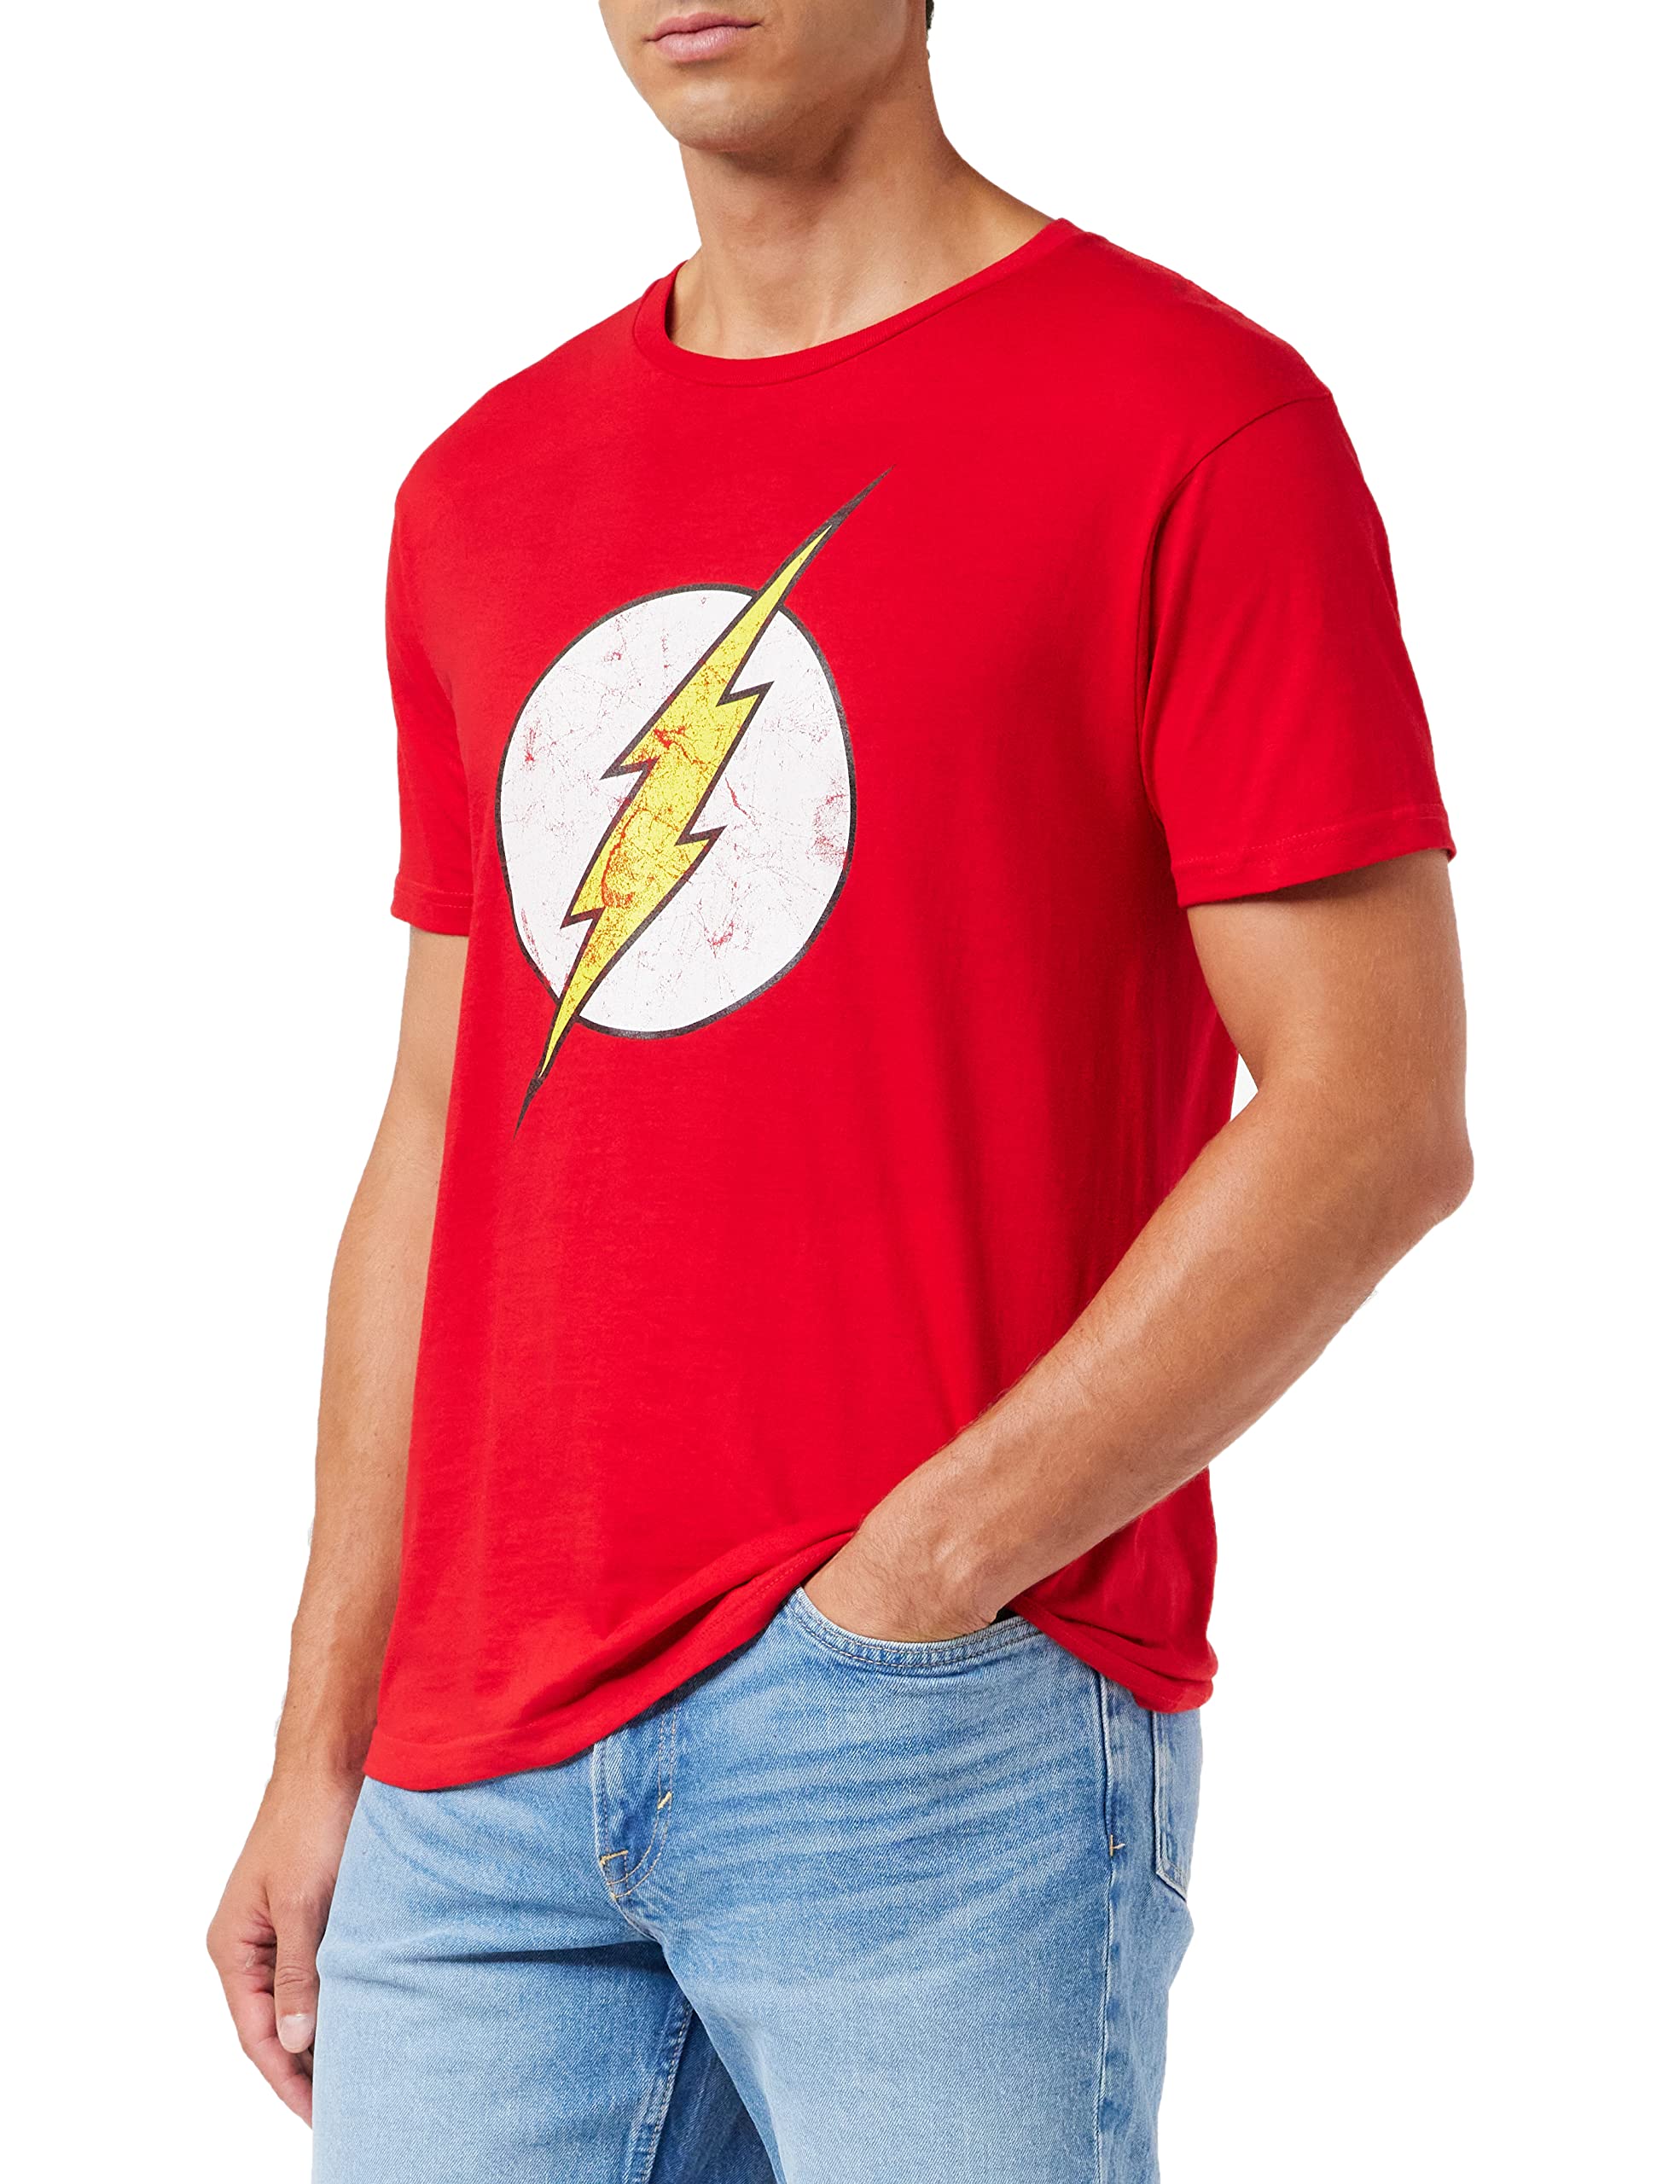 Flash Herren Logo T-Shirt, rot, M